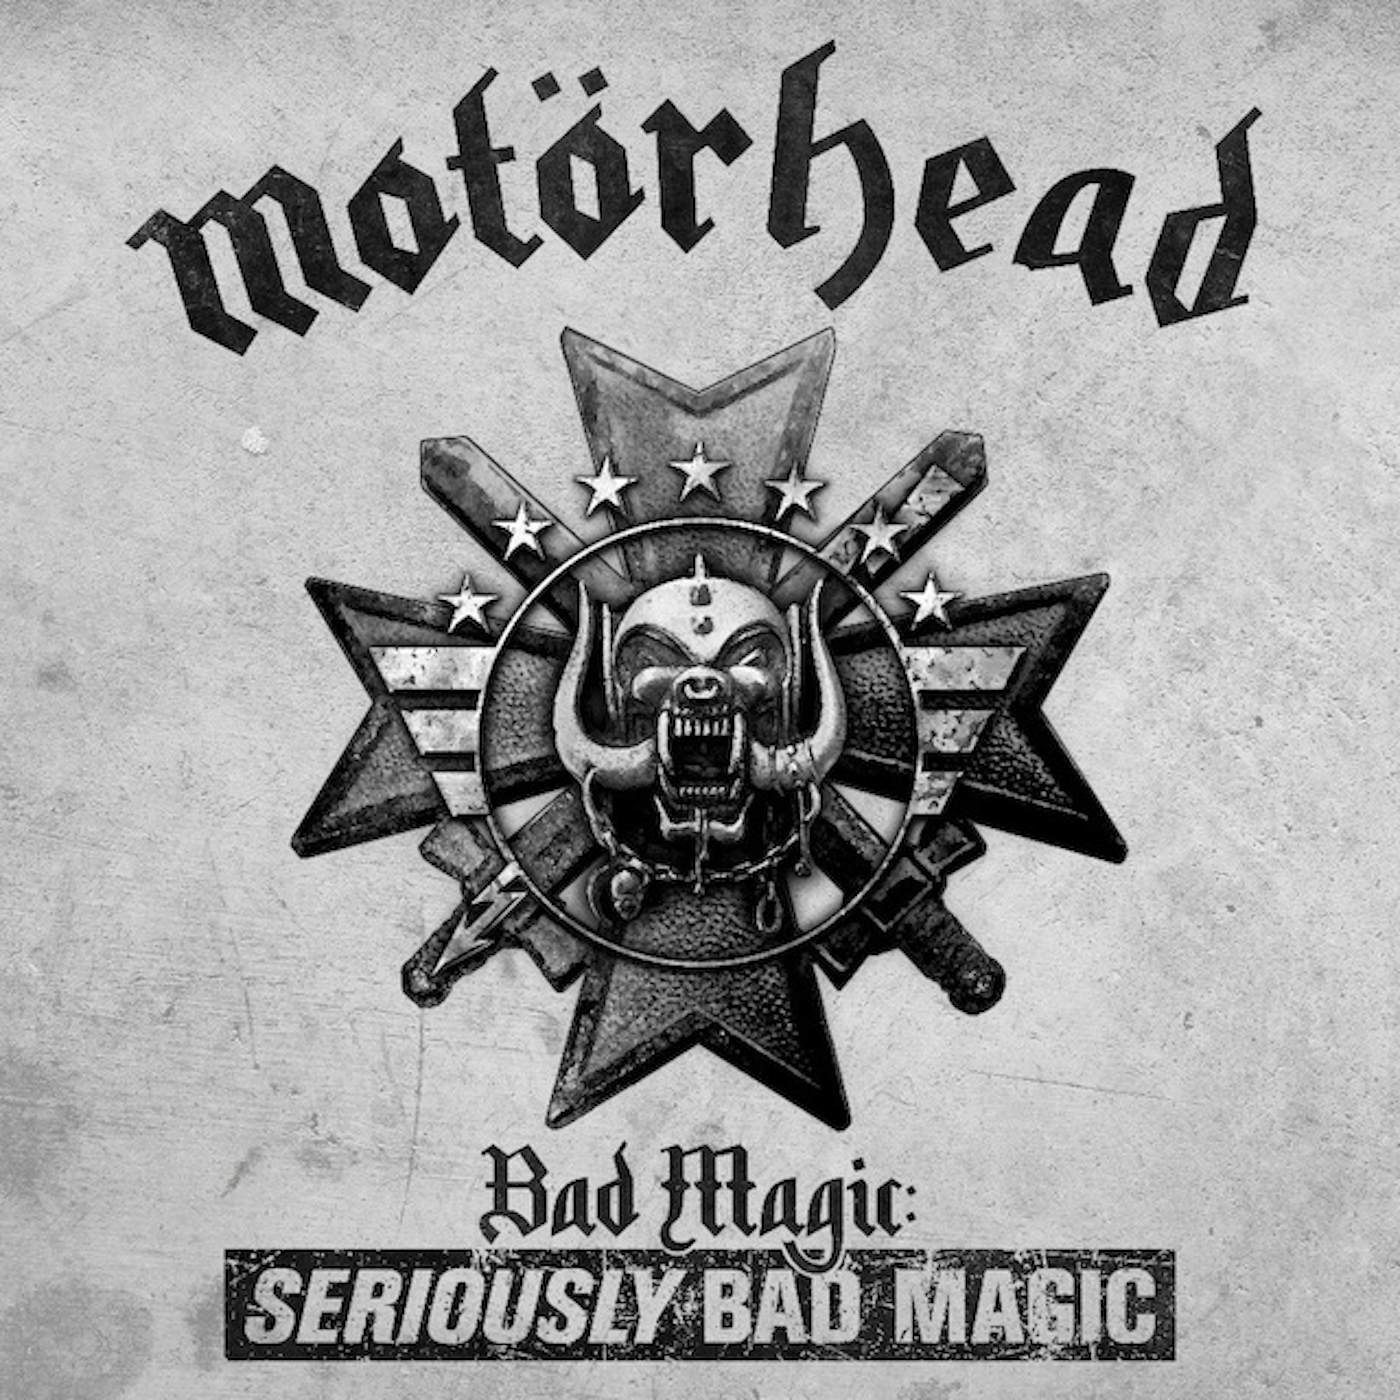 Motörhead Bad Magic: Seriously Bad Magic Vinyl Record